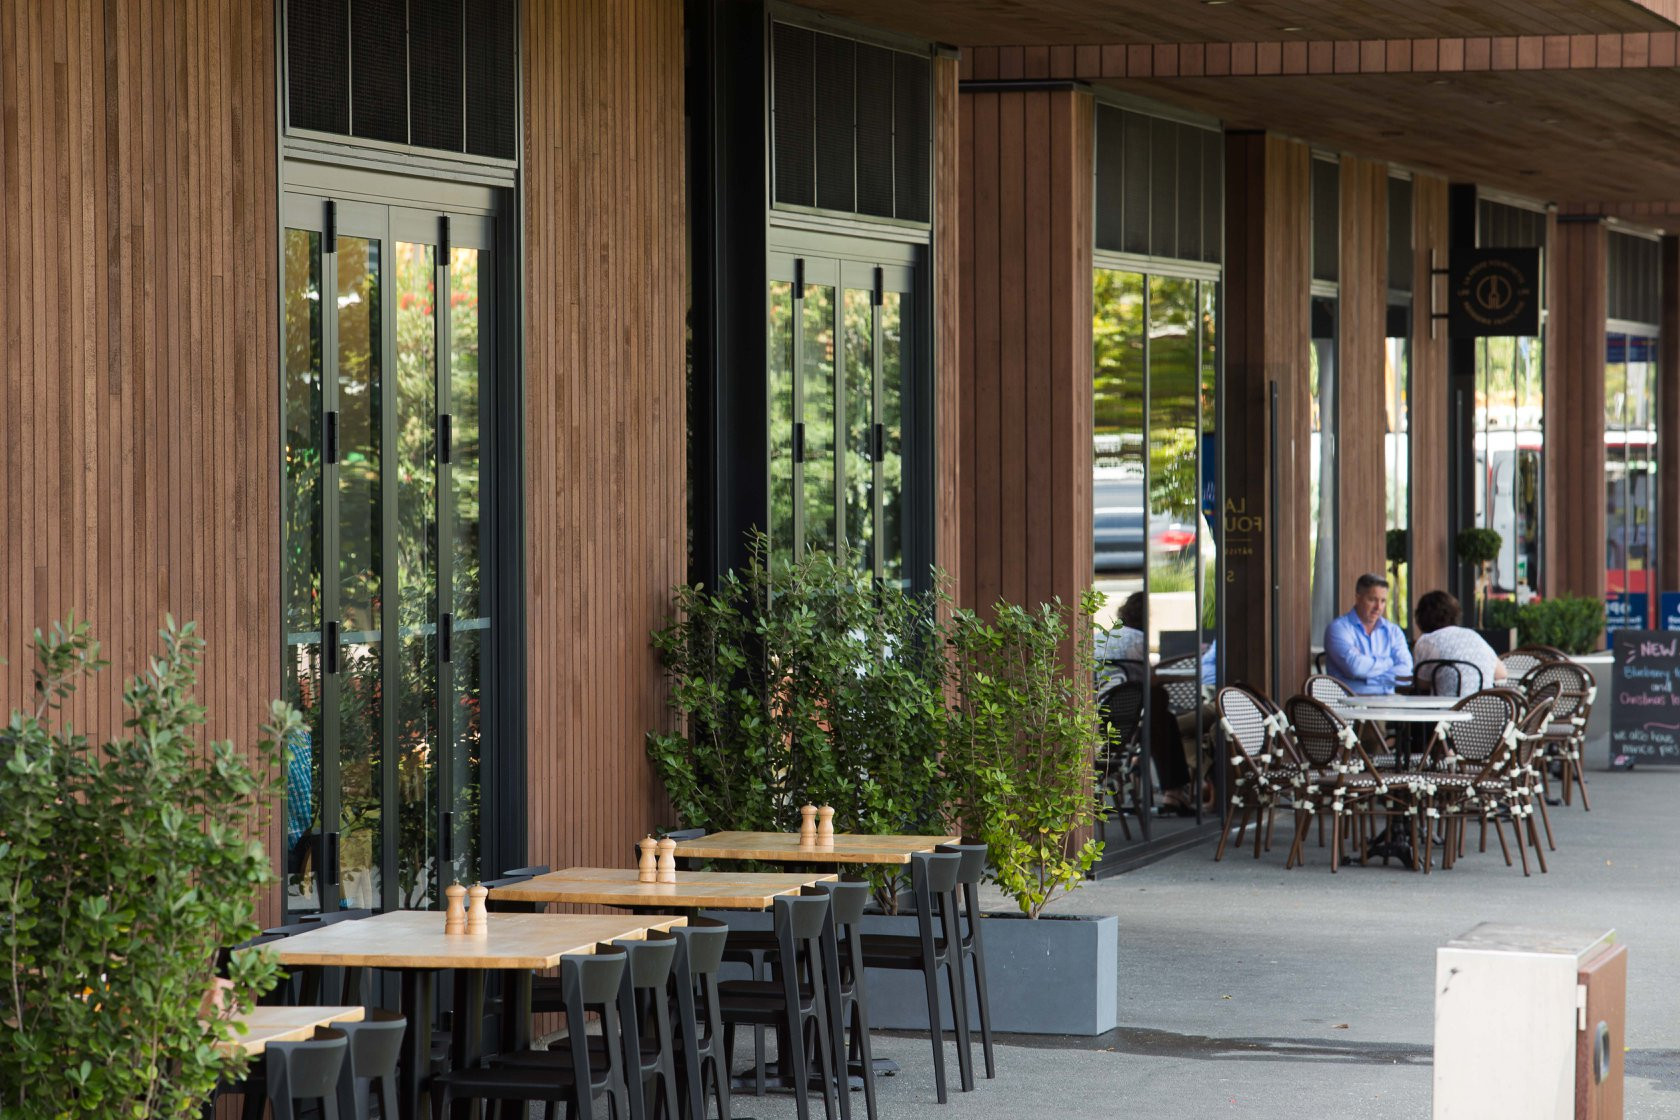 Building with a wooden facade and an outdoor café dining area